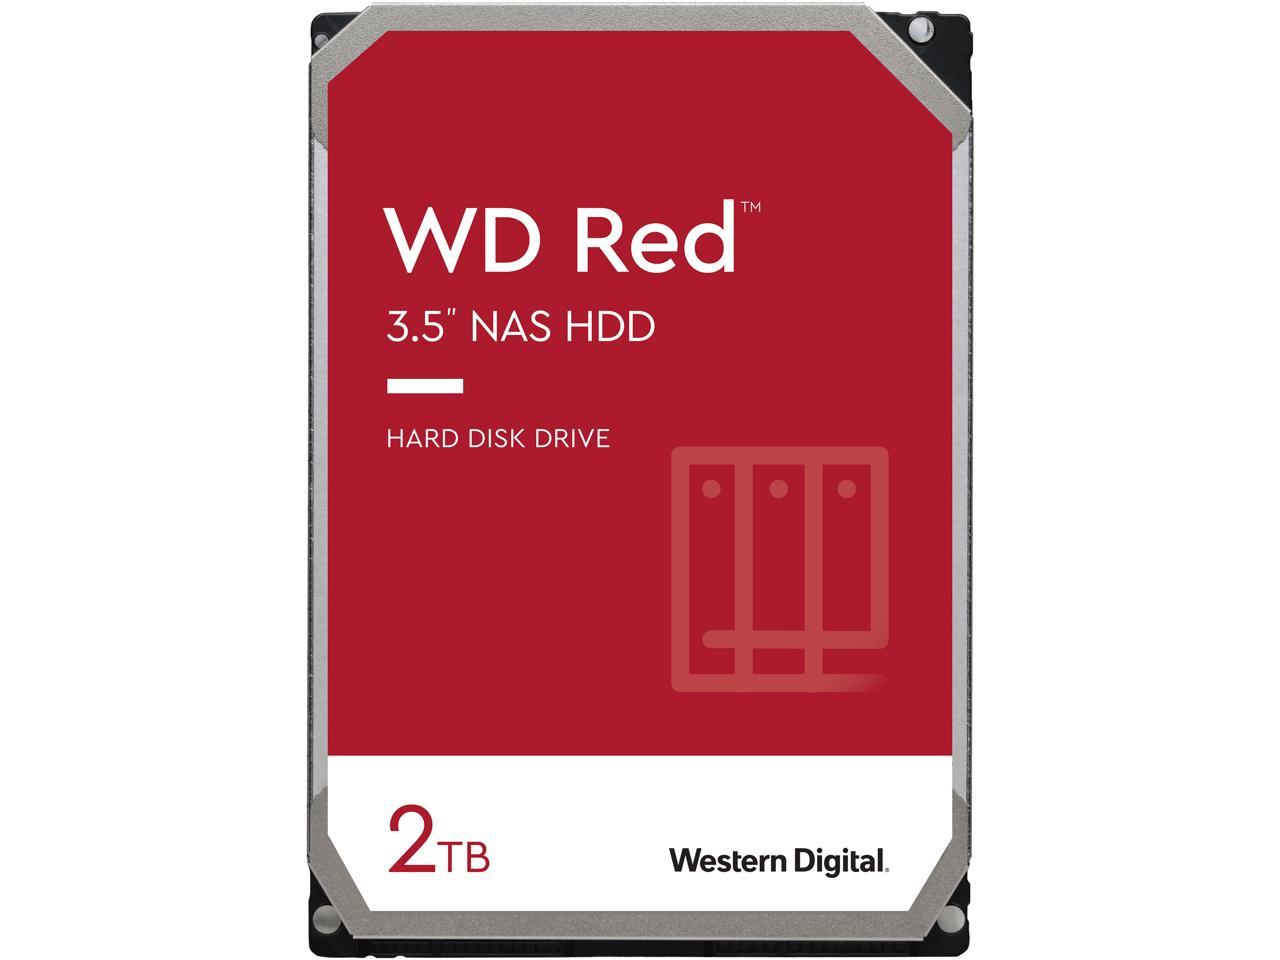 Wd Red 2Tb Nas Internal Hard Drive - 5400 Rpm Class, Sata 6Gb/S, Smr, 256Mb Cache, 3.5" - Wd20Efax